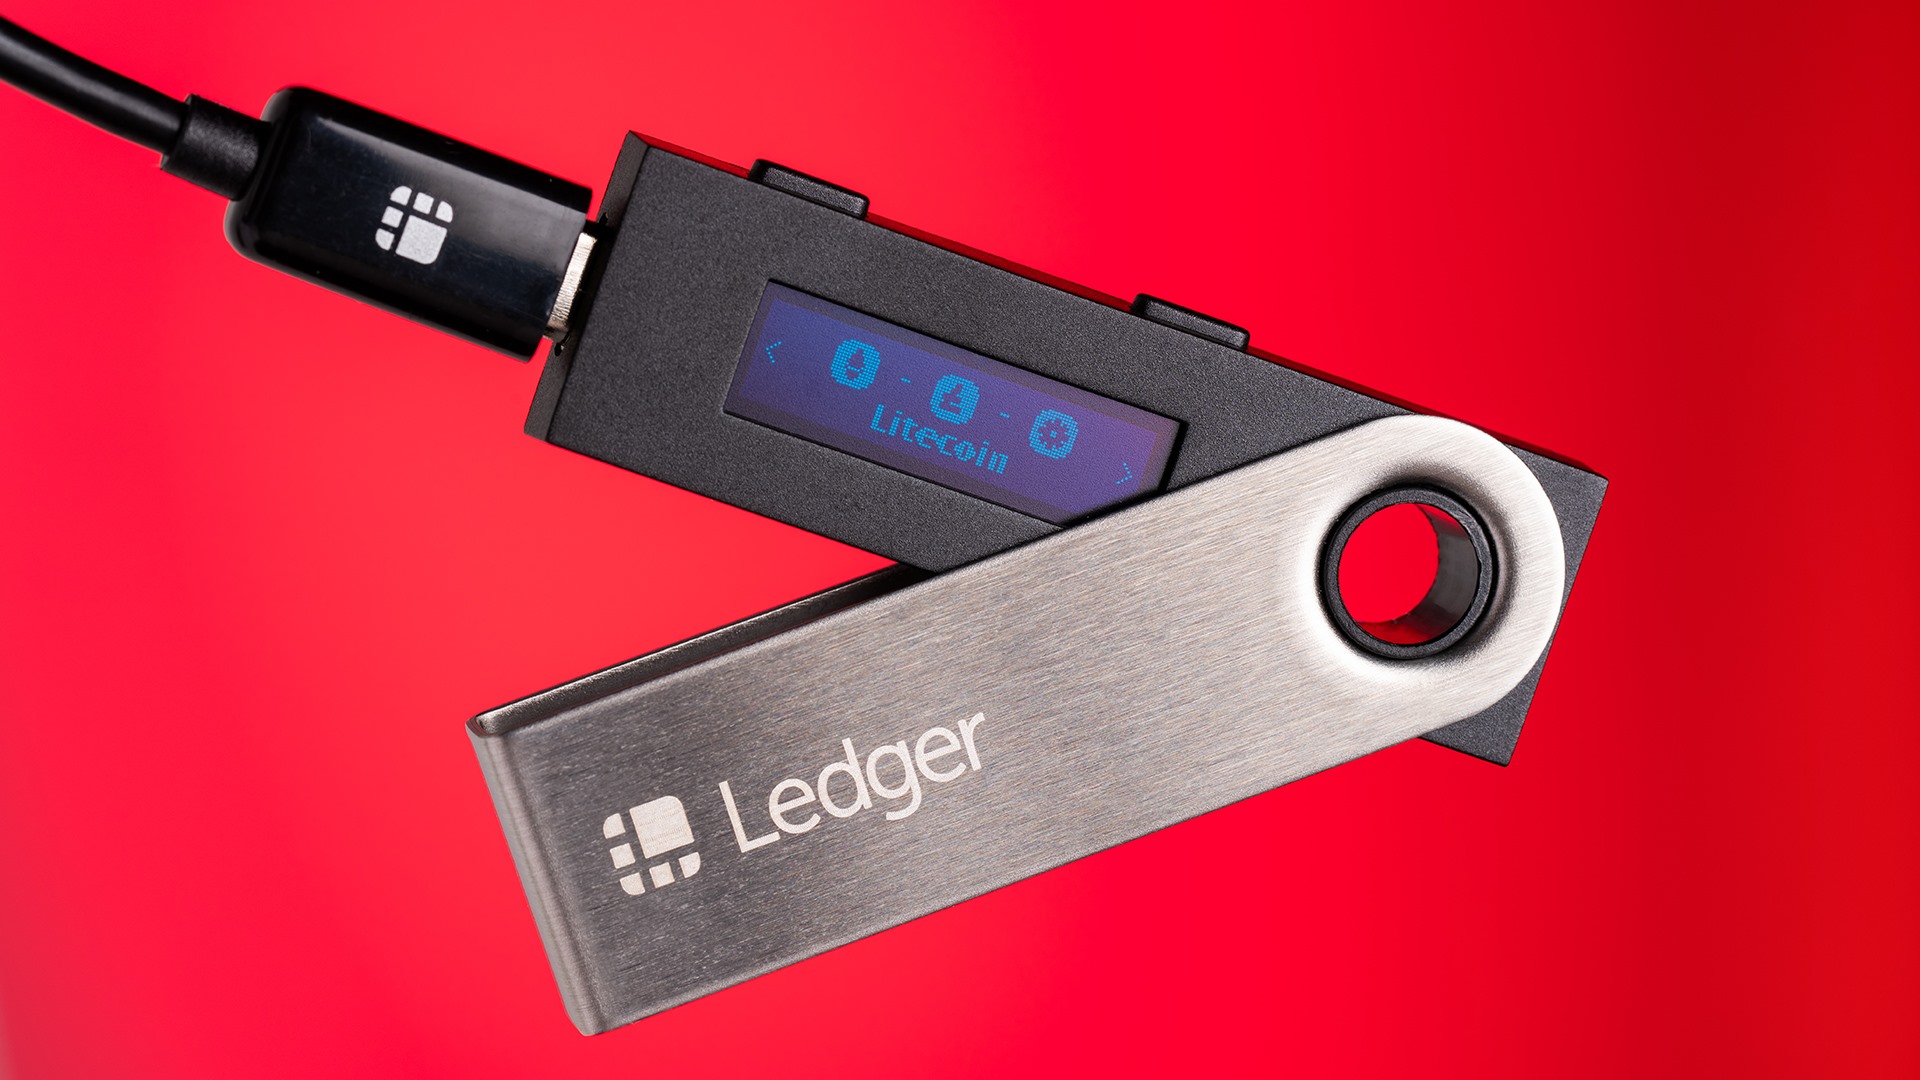 What Is A Ledger Nano